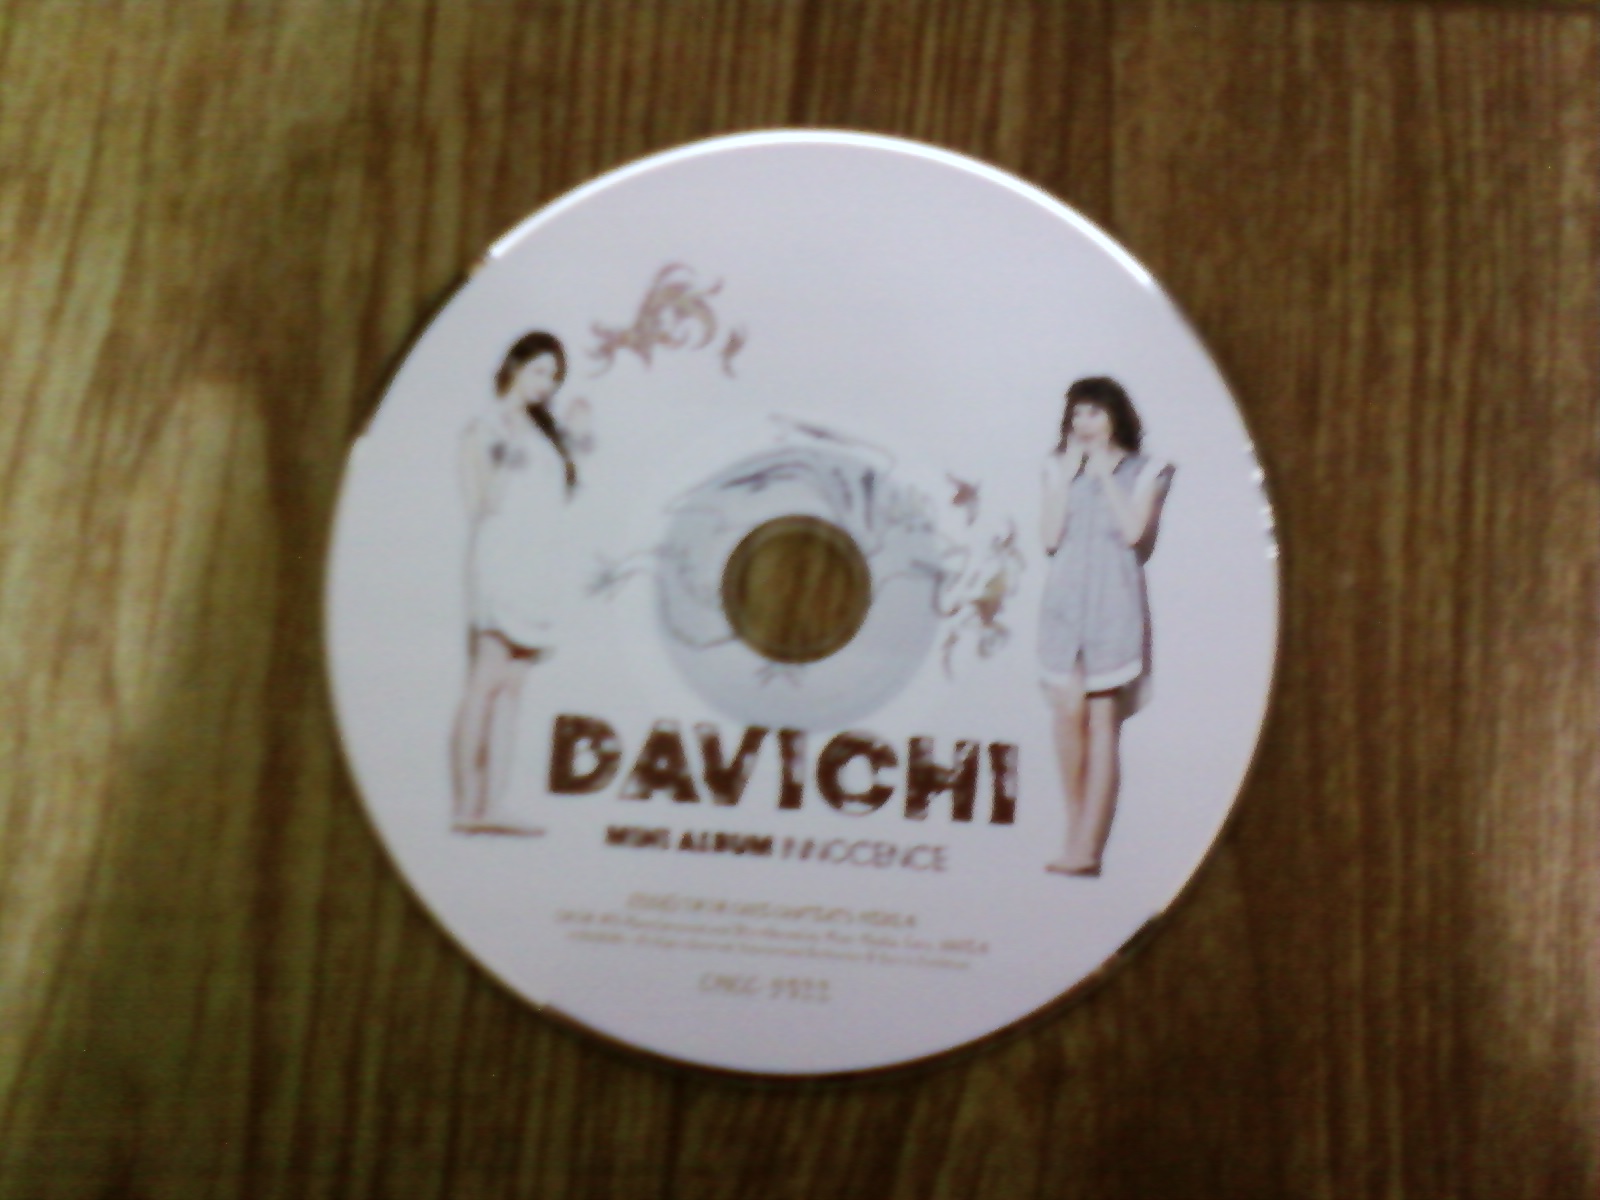 DAVICHI_CD.jpg